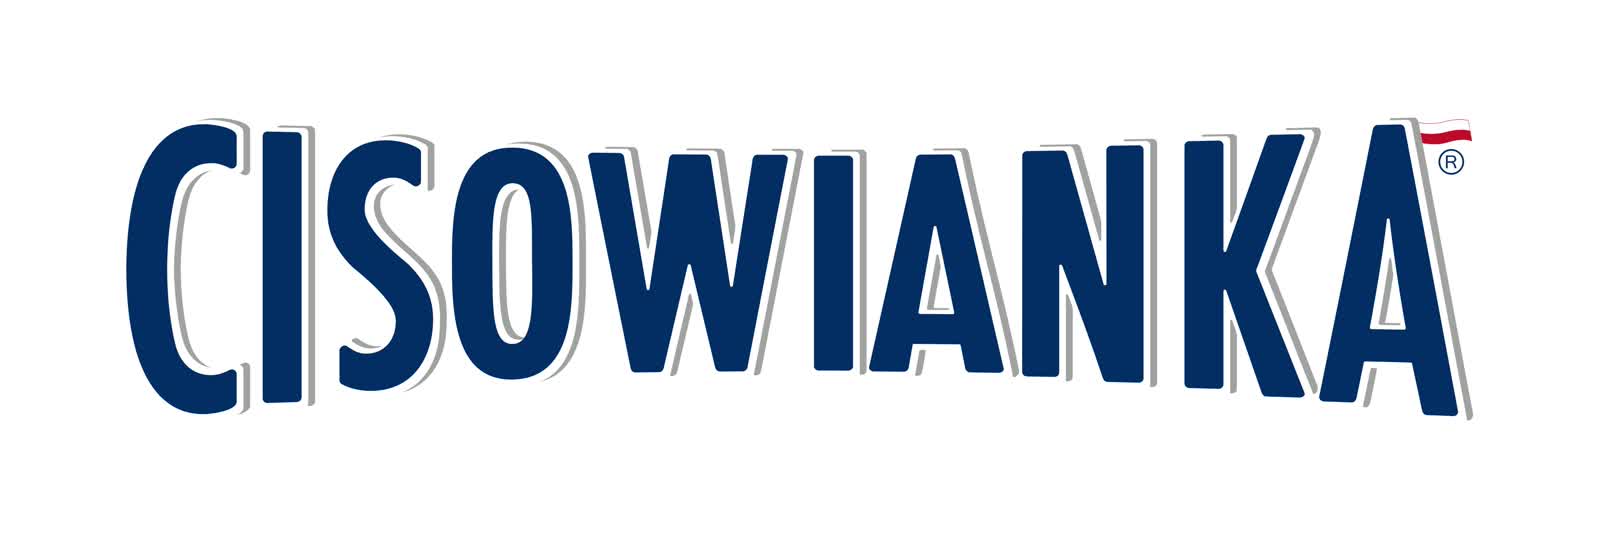 Cisowianka_logo 2019_PL_blue.jpg